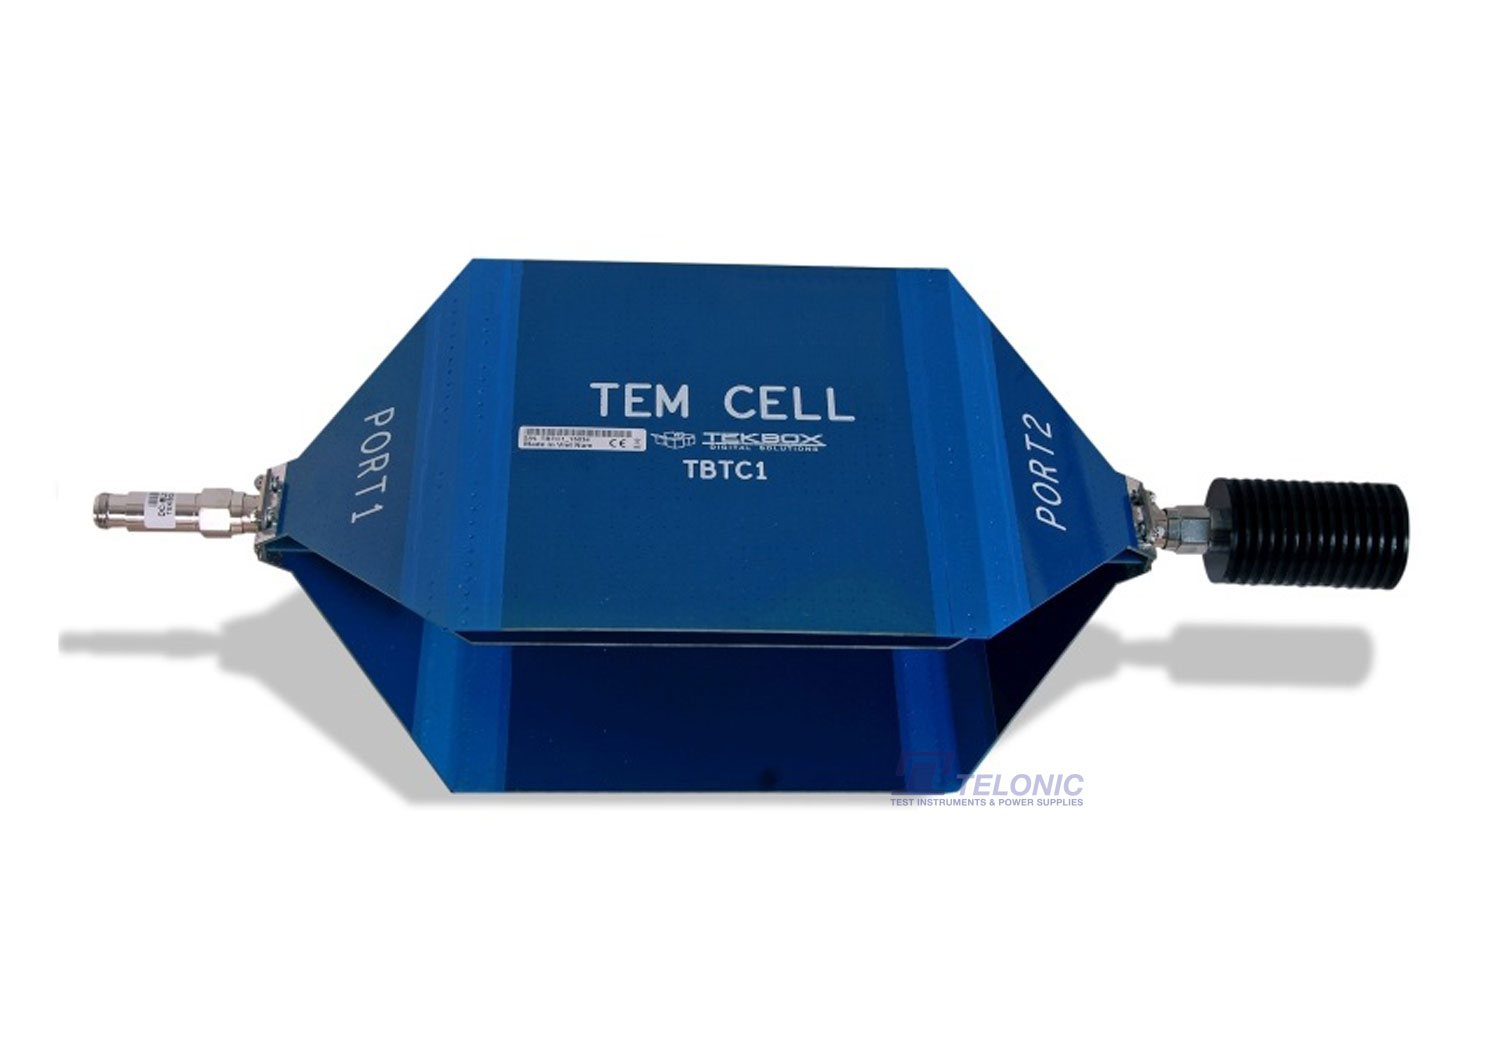 TEKBOX TBTC1 Open TEM Cell